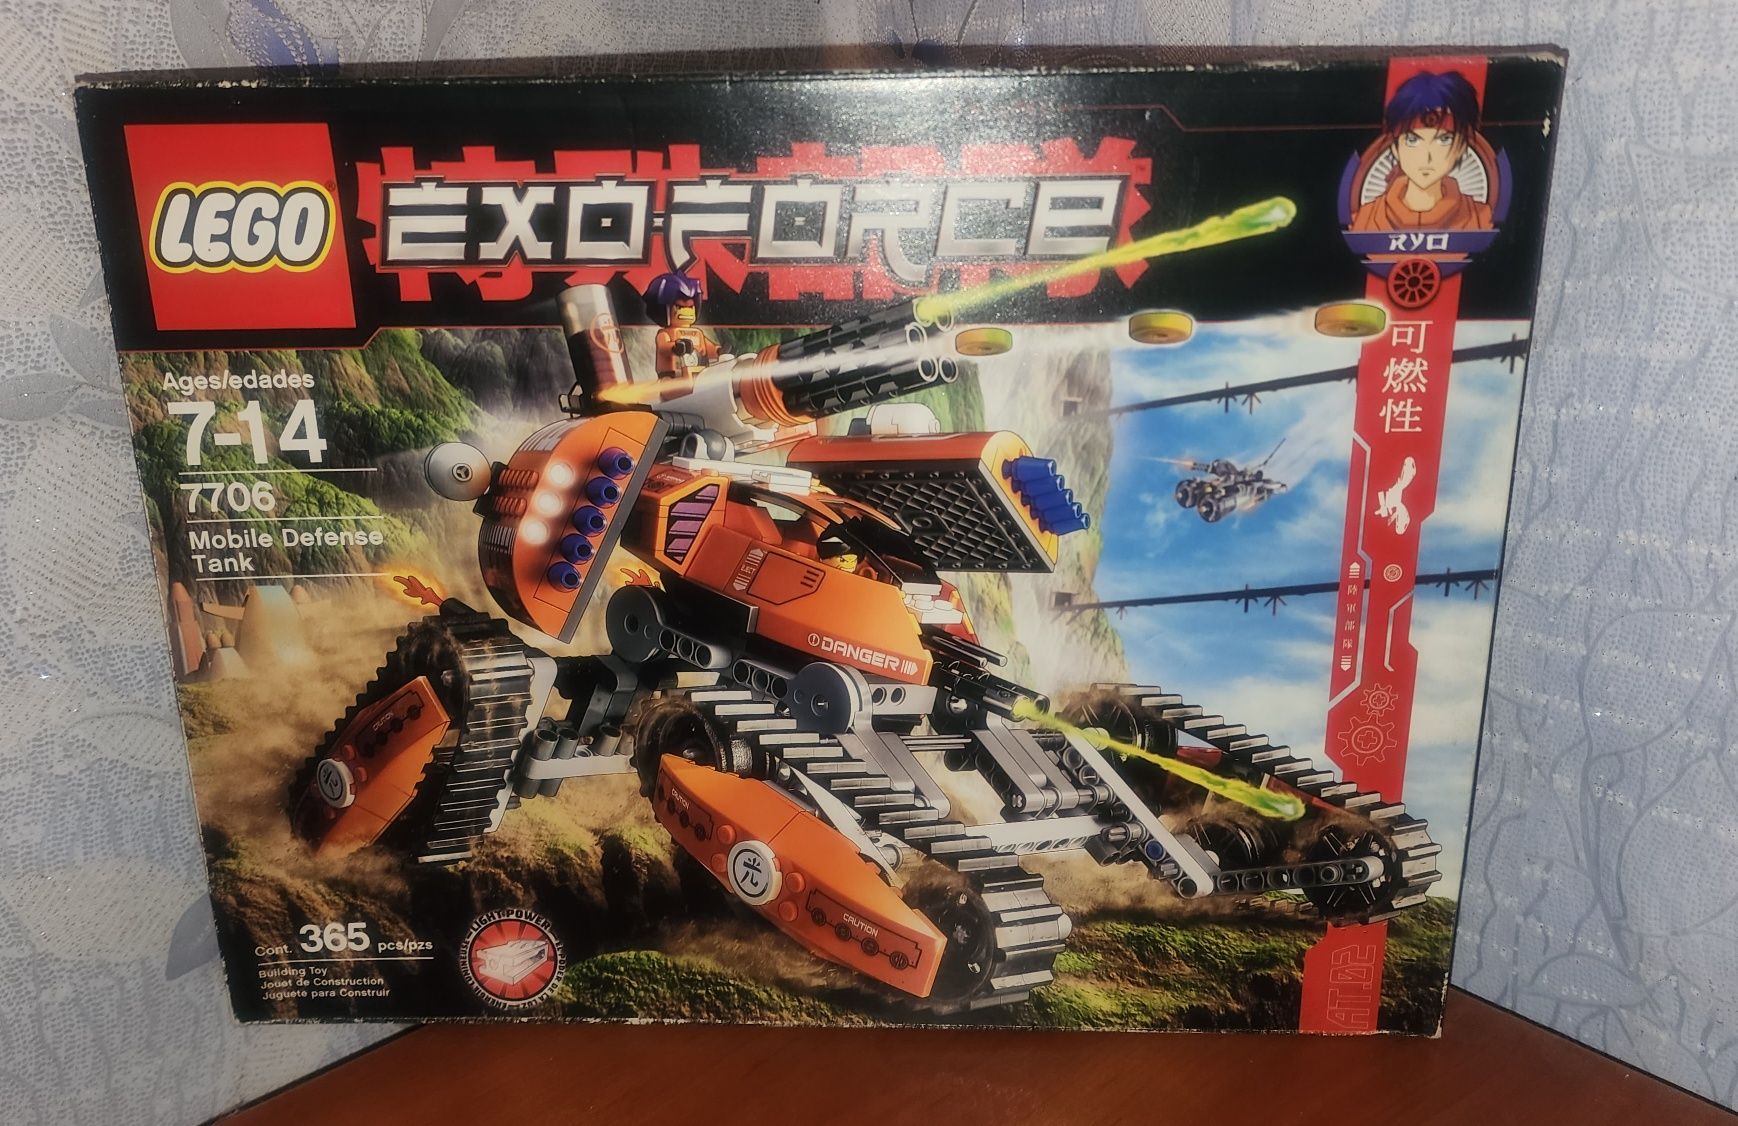 LEGO Exo-Force 7707, 7706 Striking venom, Tank, новые наборы с пломбой